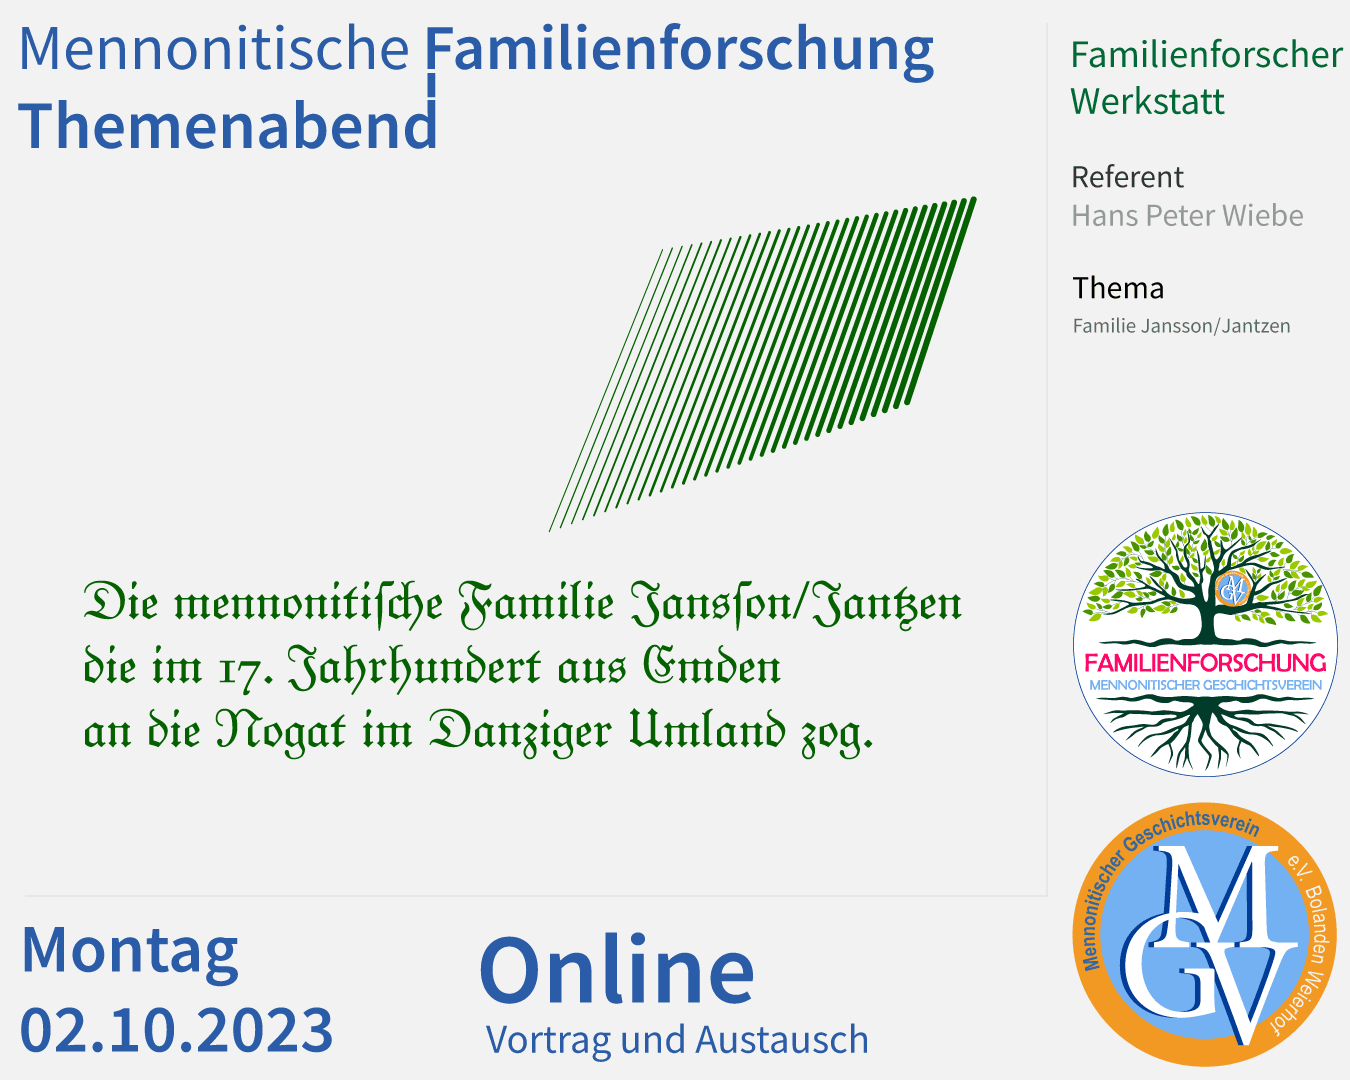 Mennonitische Familienforschung Familie Jansson Jantzen.